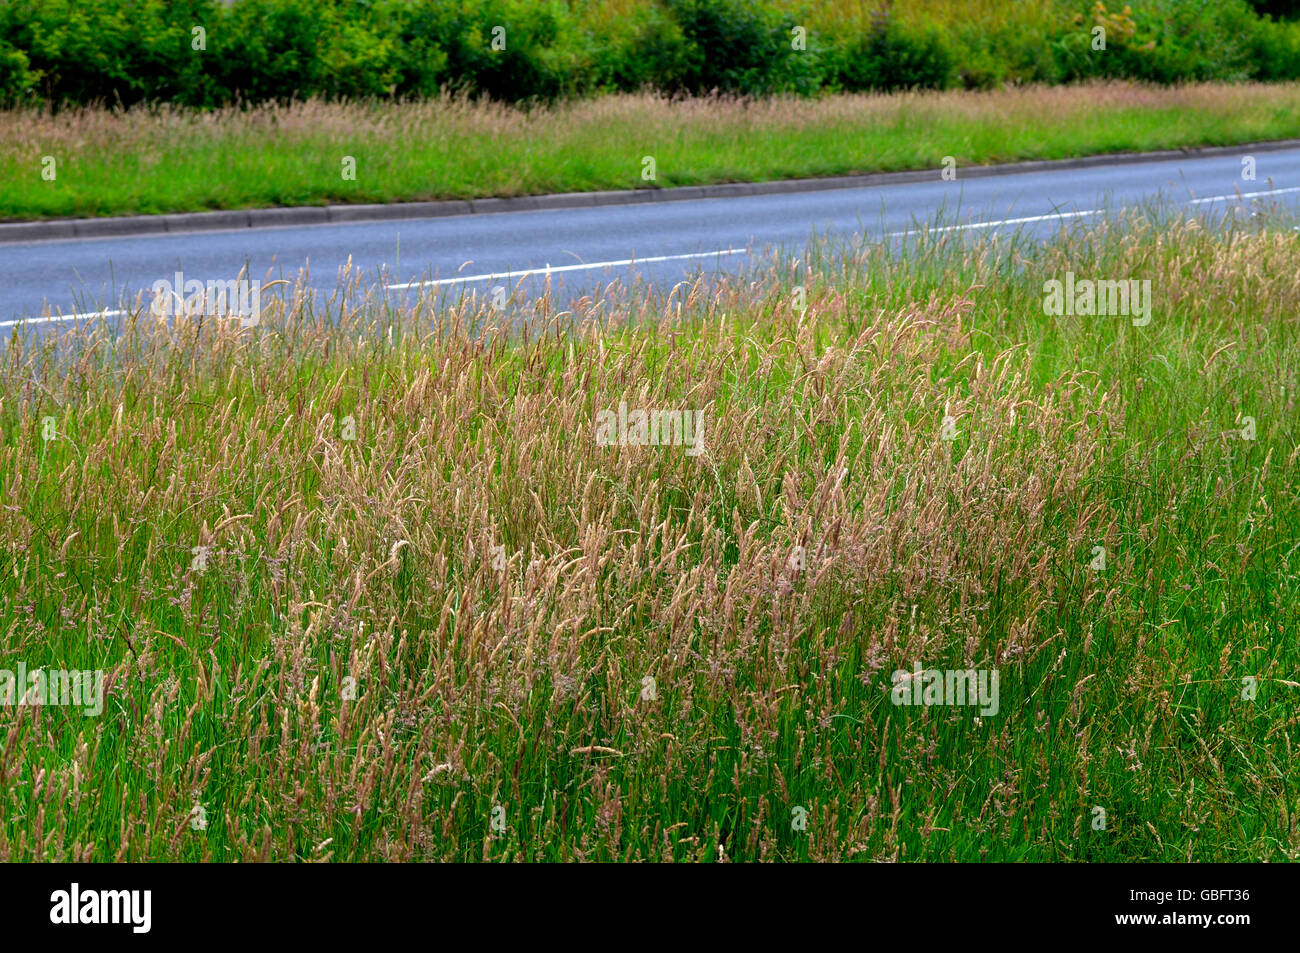 overgrown grass verge Stock Photo